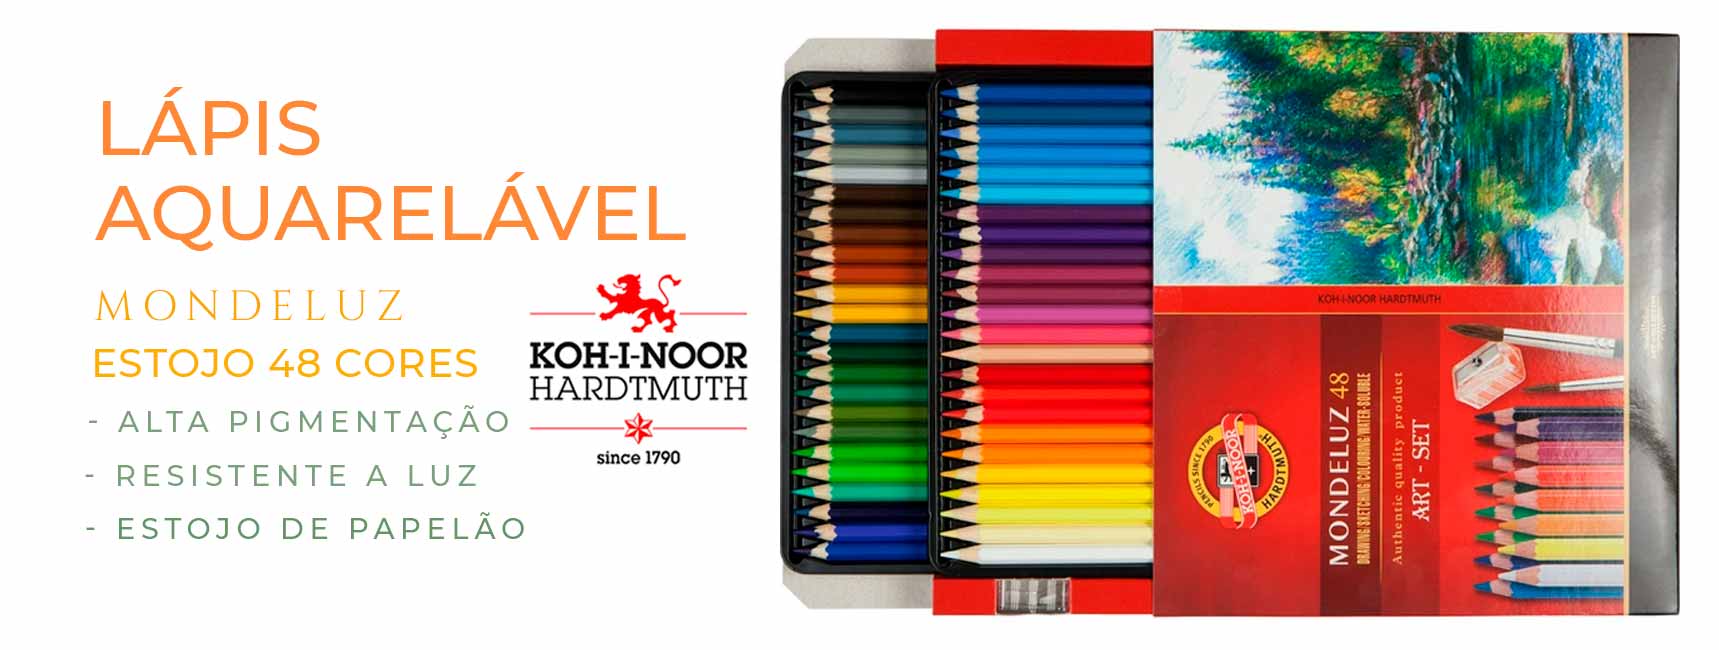 Estojo lápis de cor aquarelável 48 cores mondeluz koh-i-noor